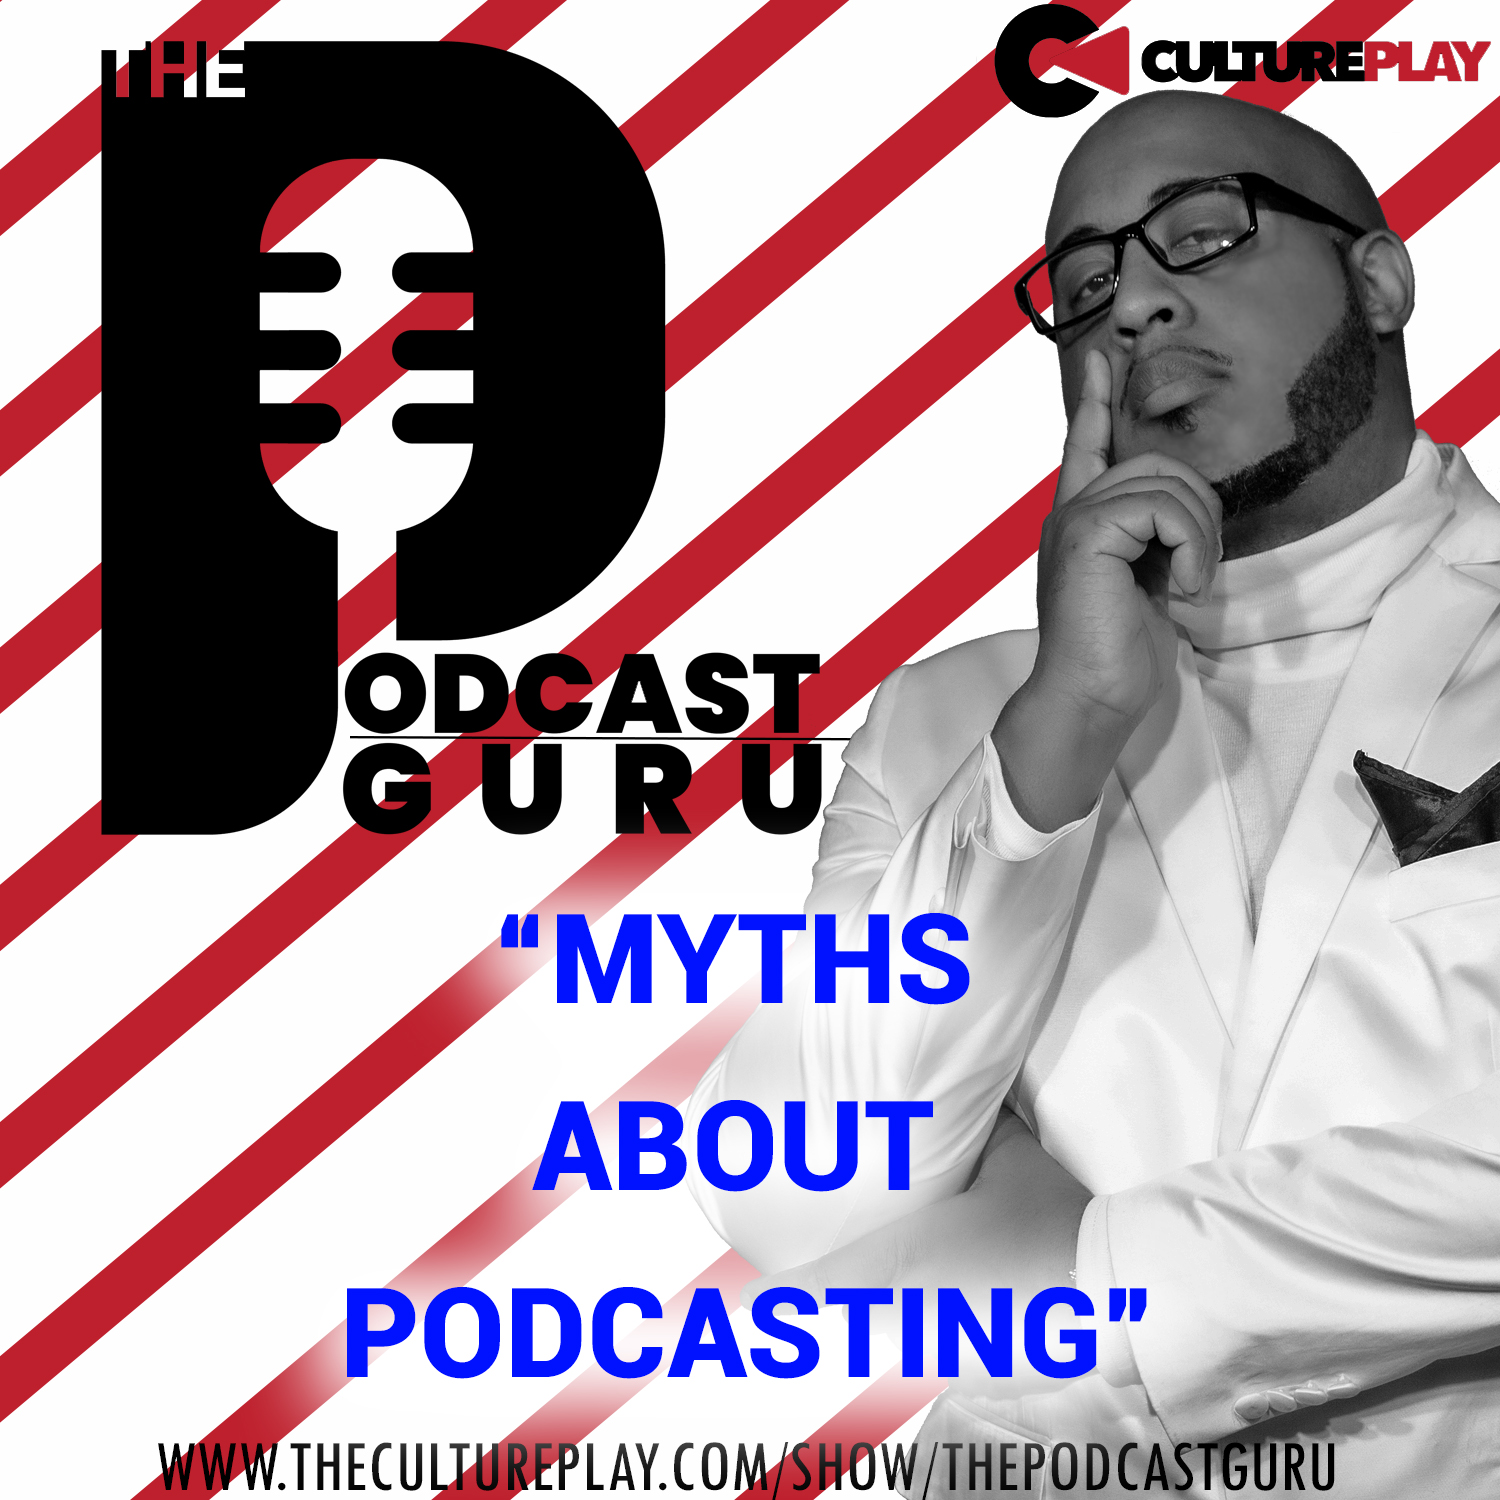 Podcast Guru - Myths About Podcasting